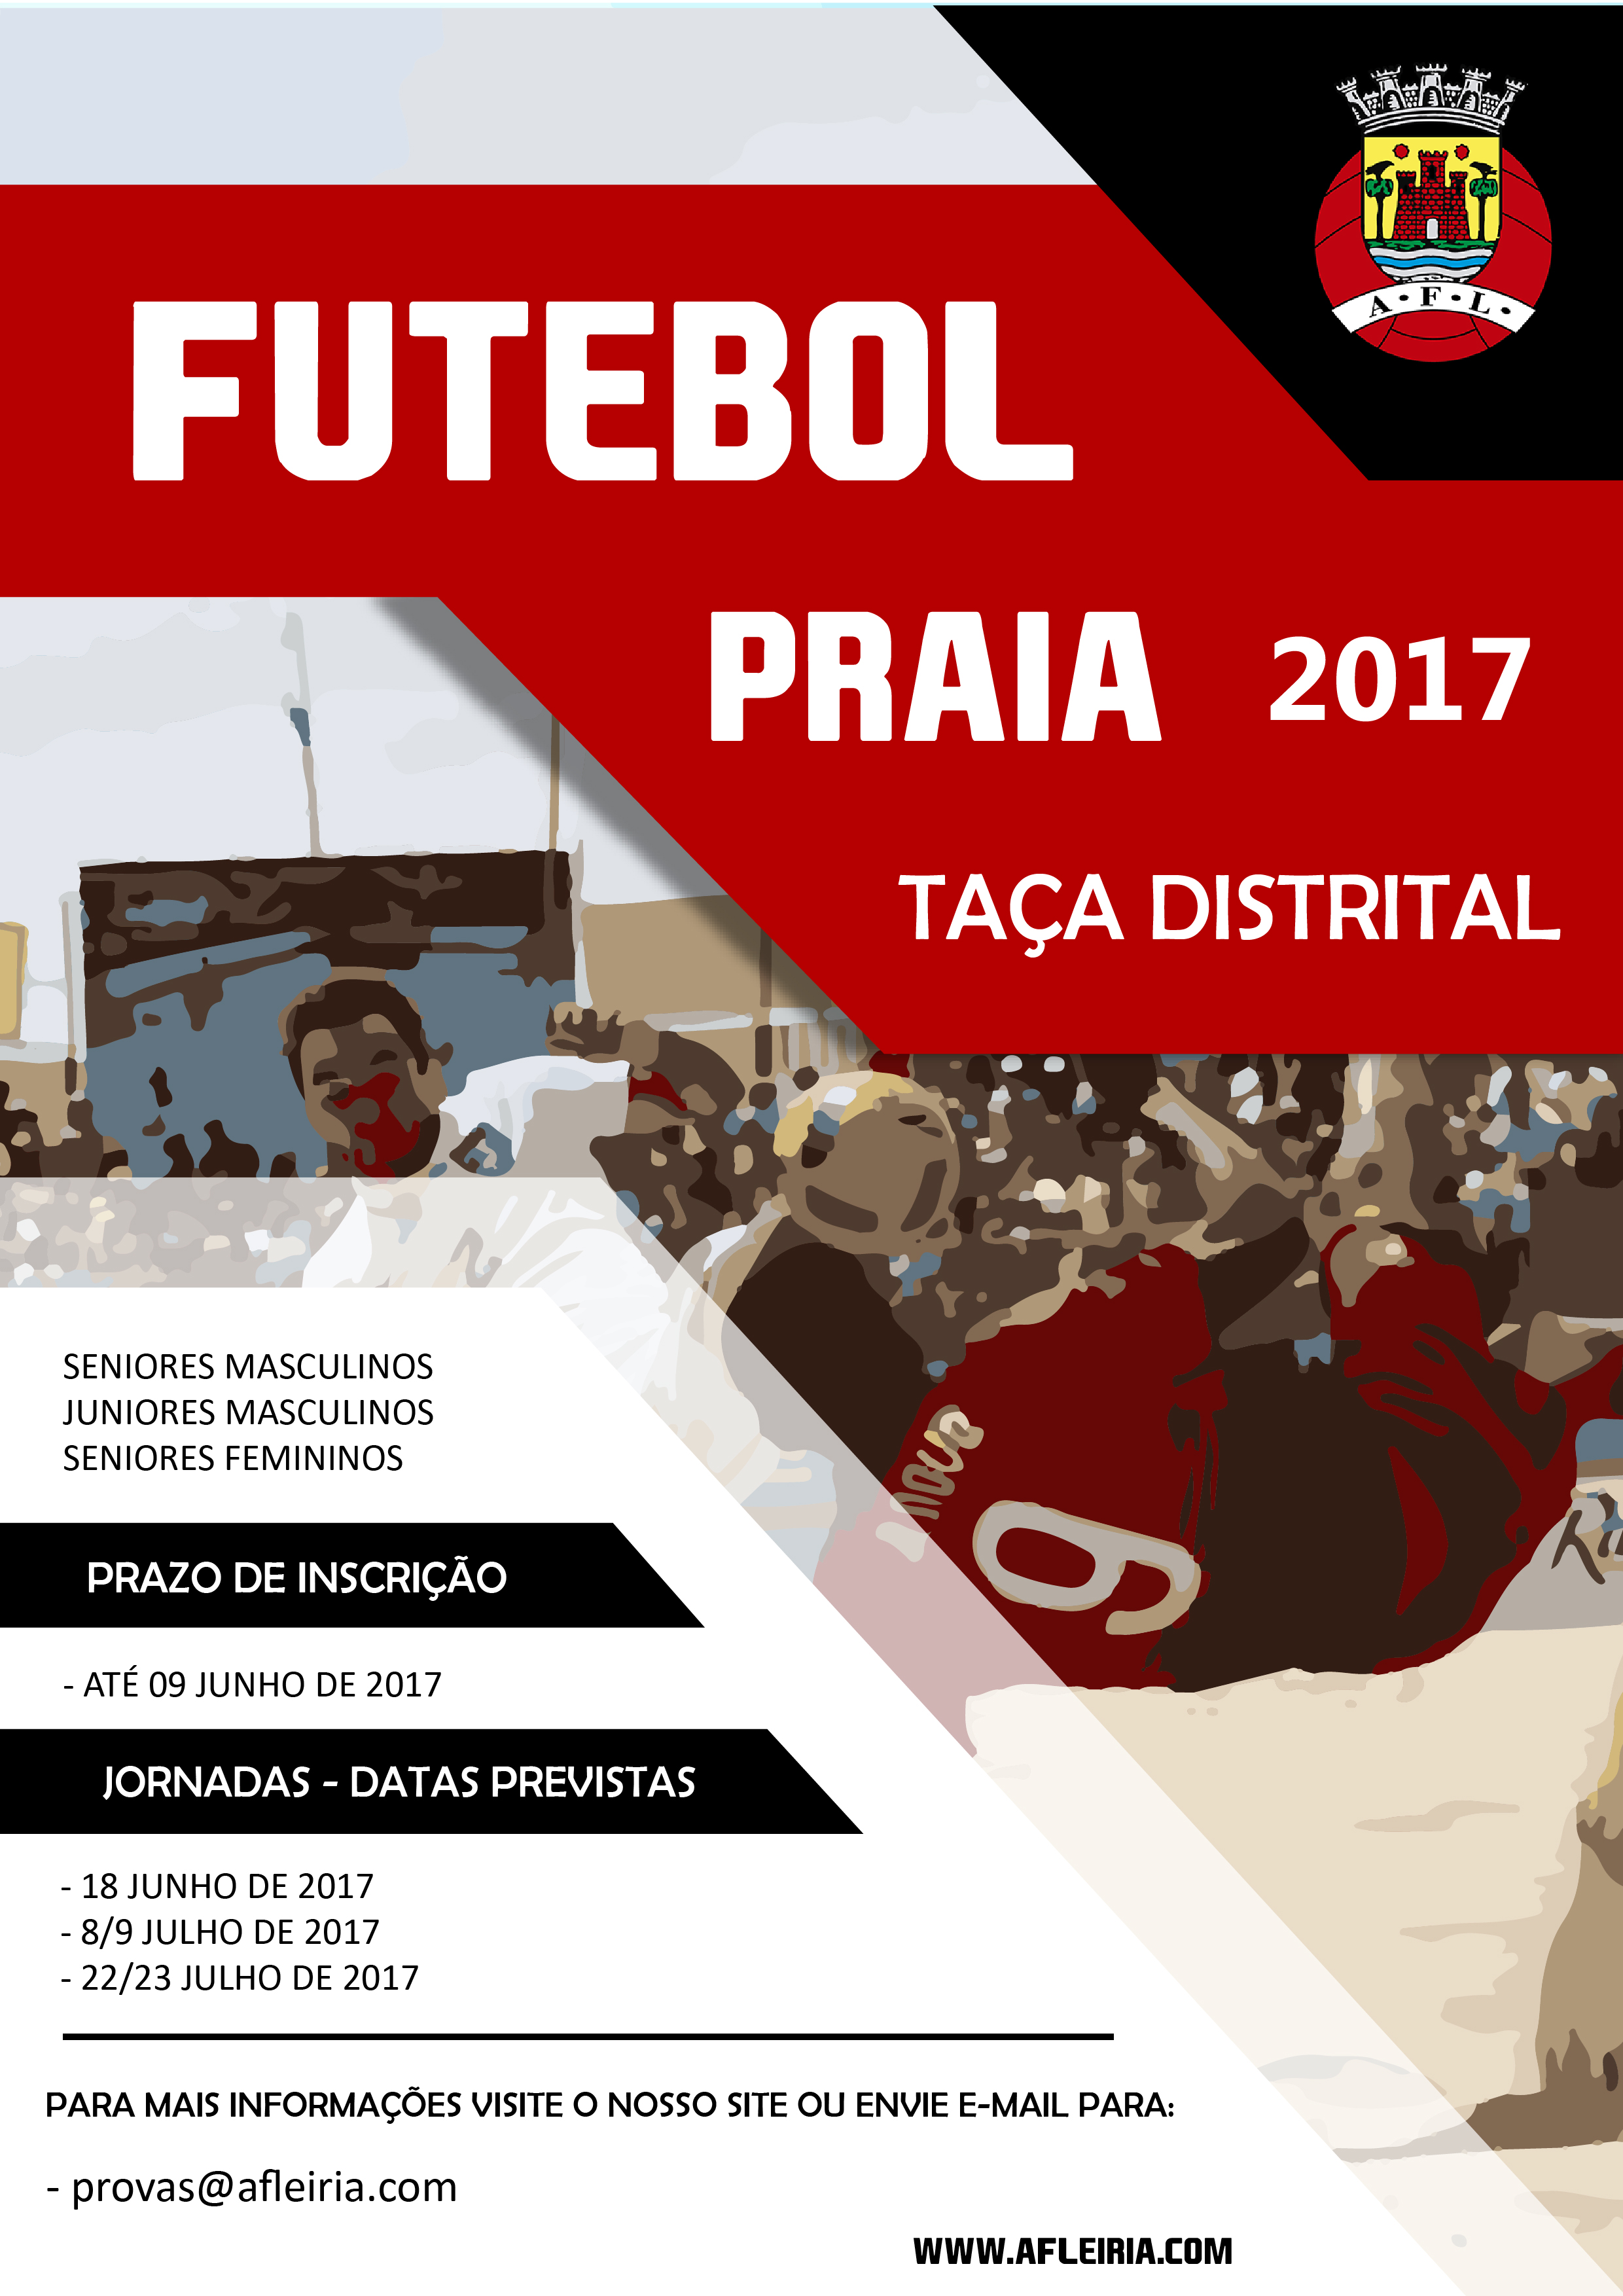 Taça Distrital Futebol de Praia